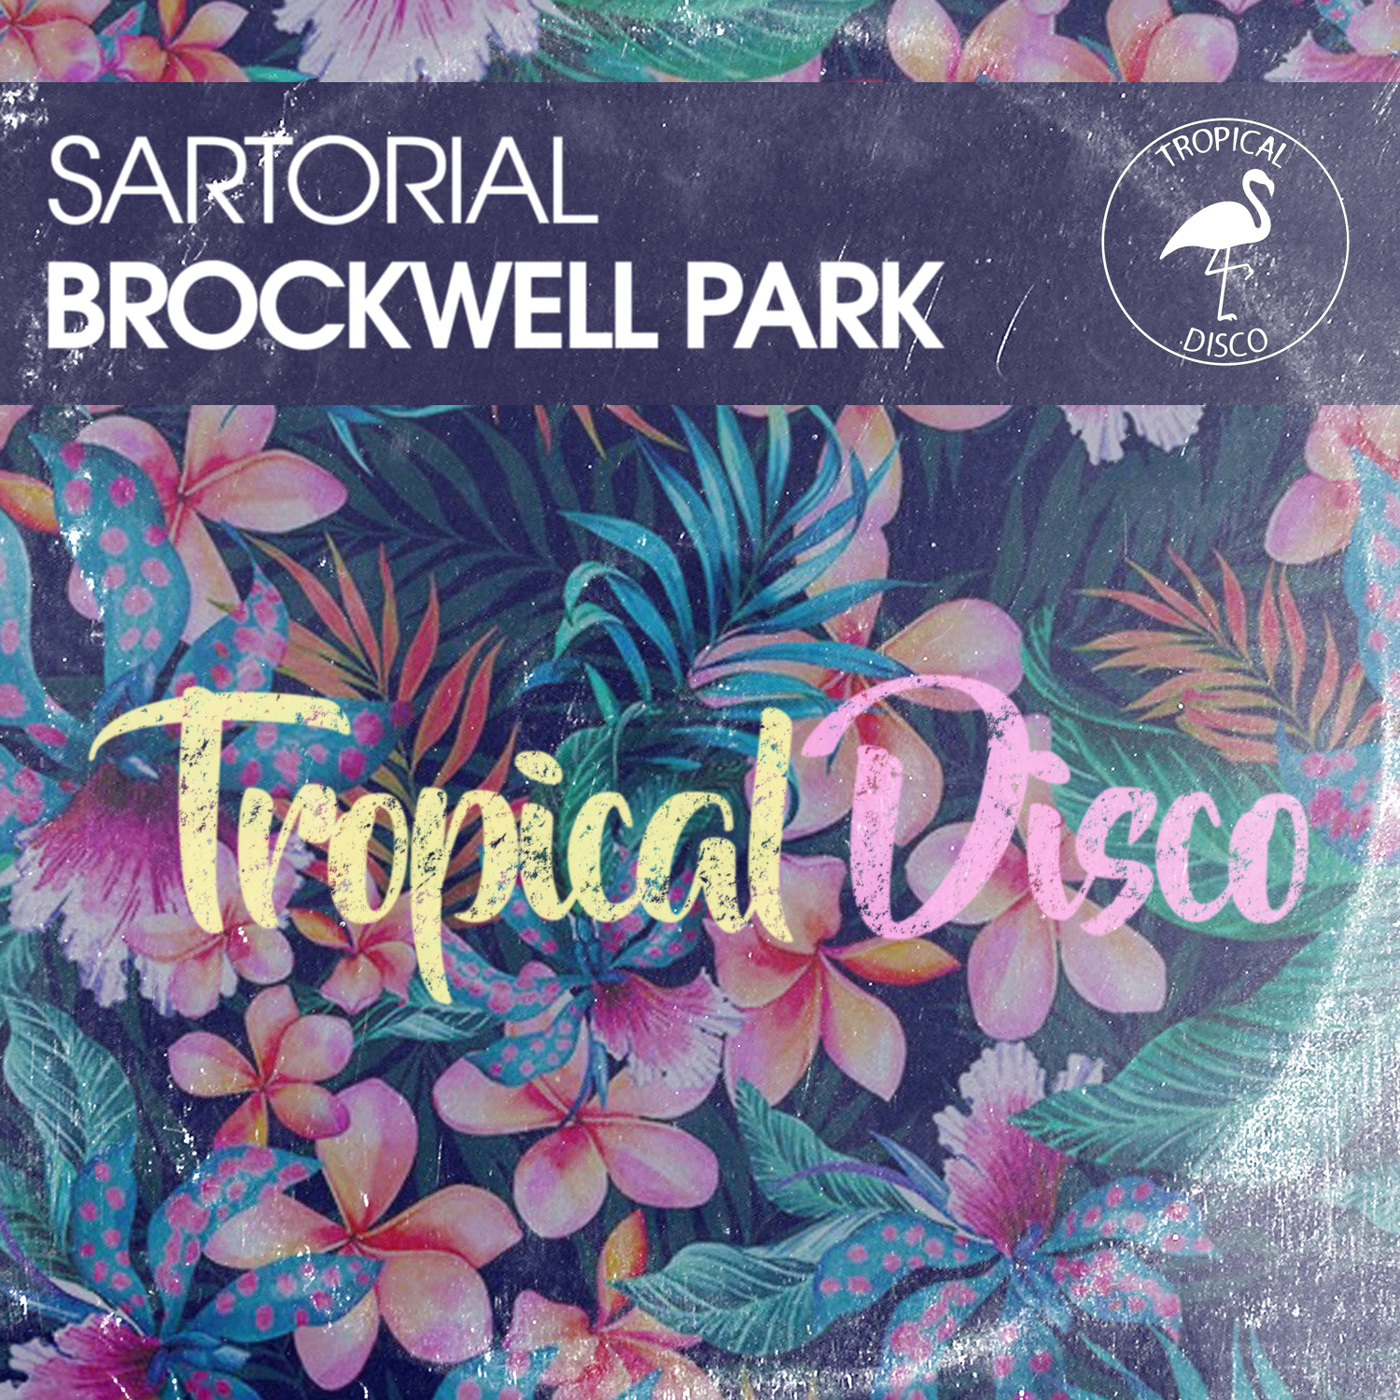 Sartorial - Brockwell Park / Tropical Disco Records